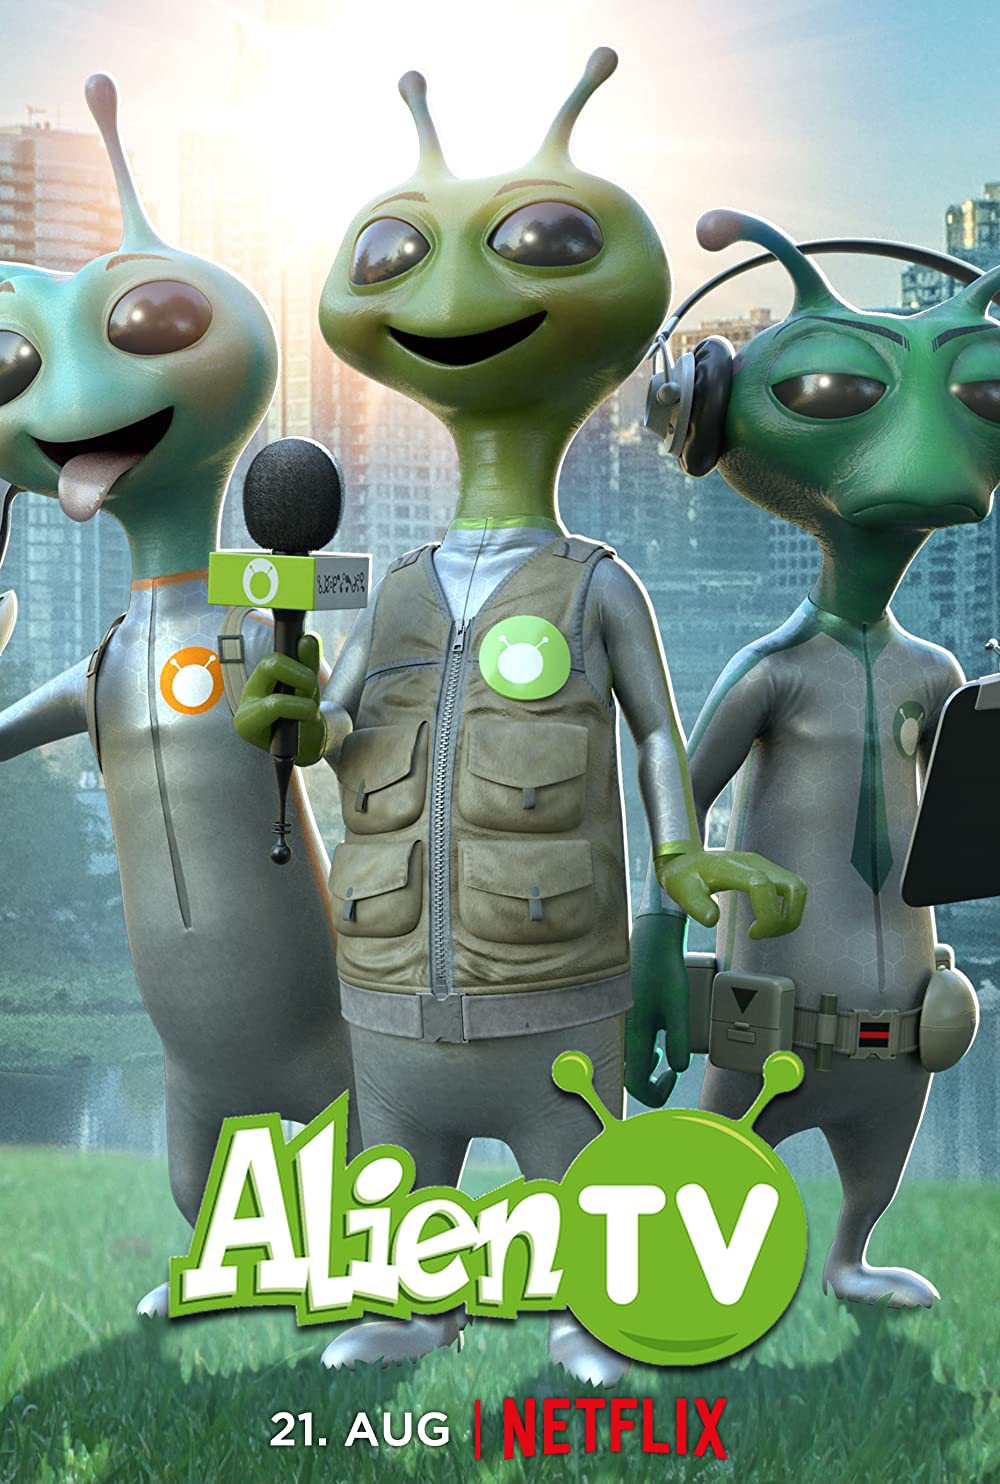 Filmbeschreibung zu Alien TV